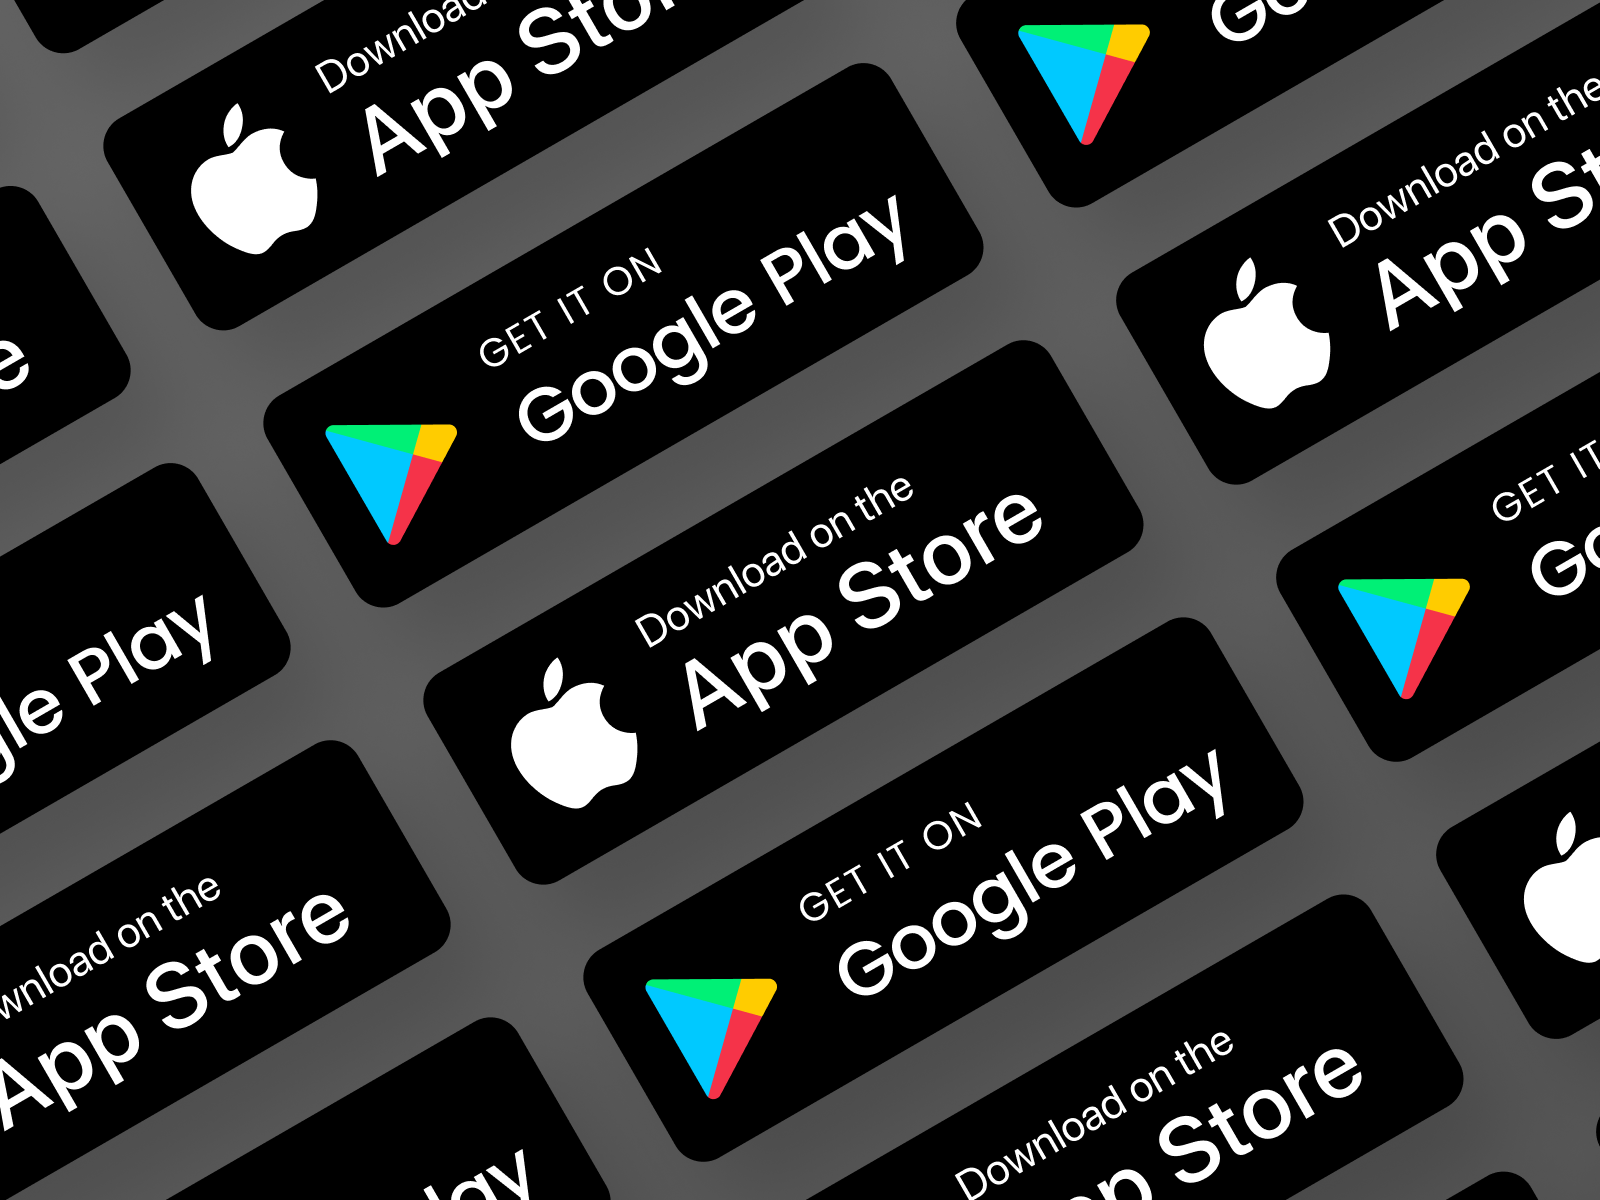 App store videos. APPSTORE приложения. Магазин приложений Apple. Гугл плей и апстор. App Store Google Play.